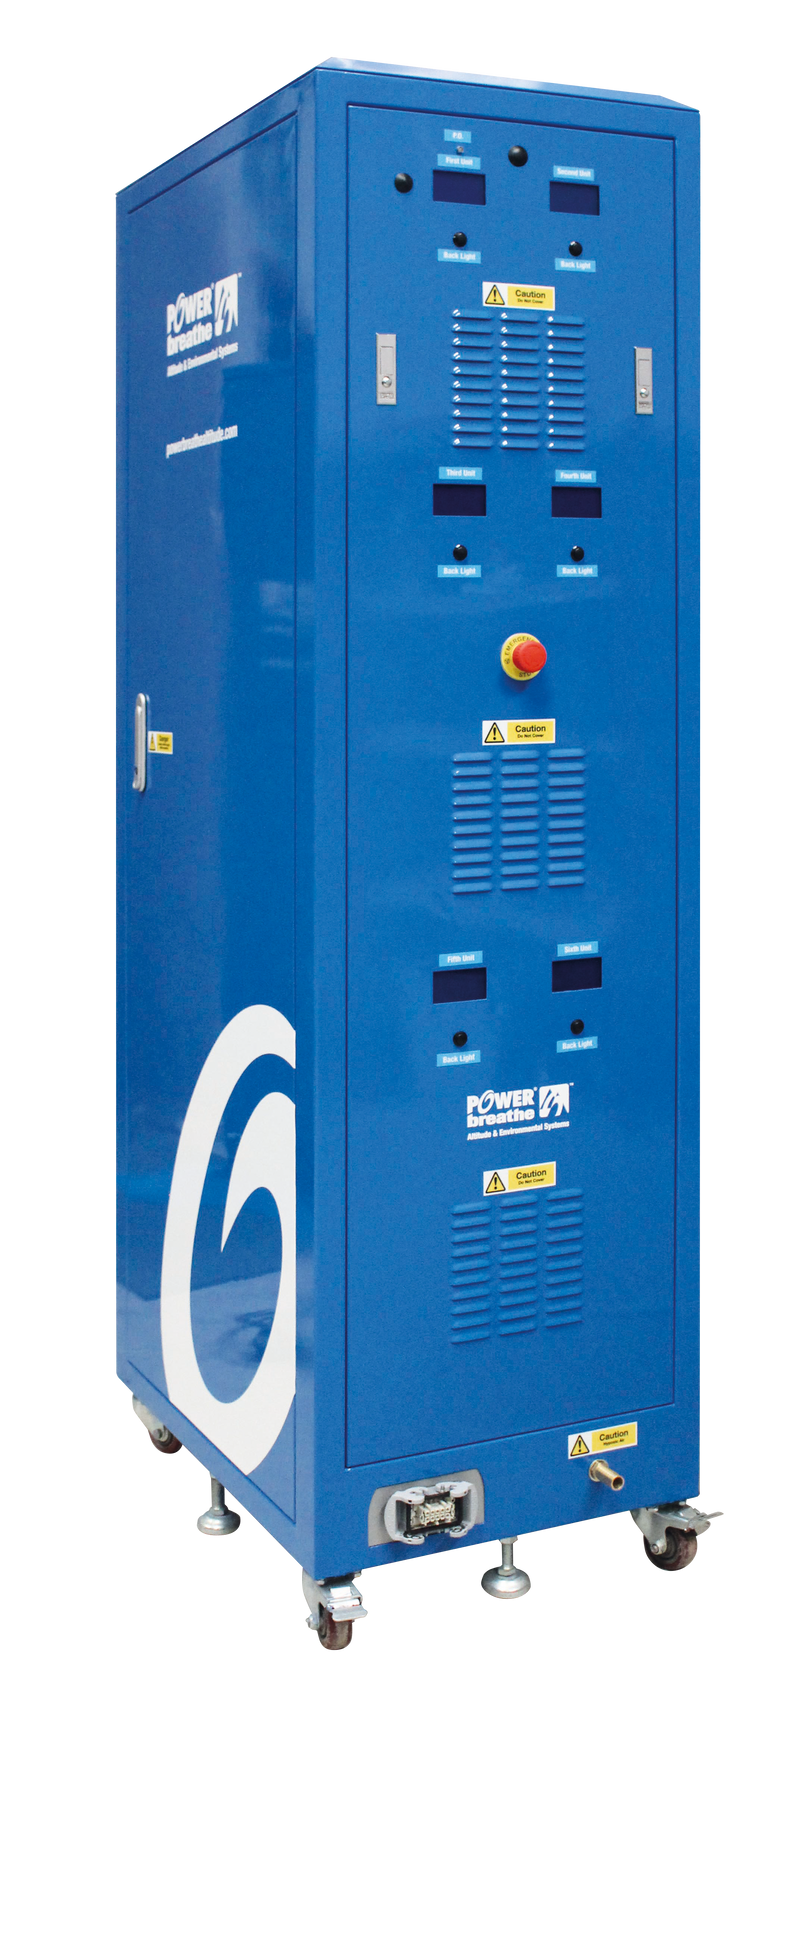 PBAES - Summit Series Hypoxic Air Generator